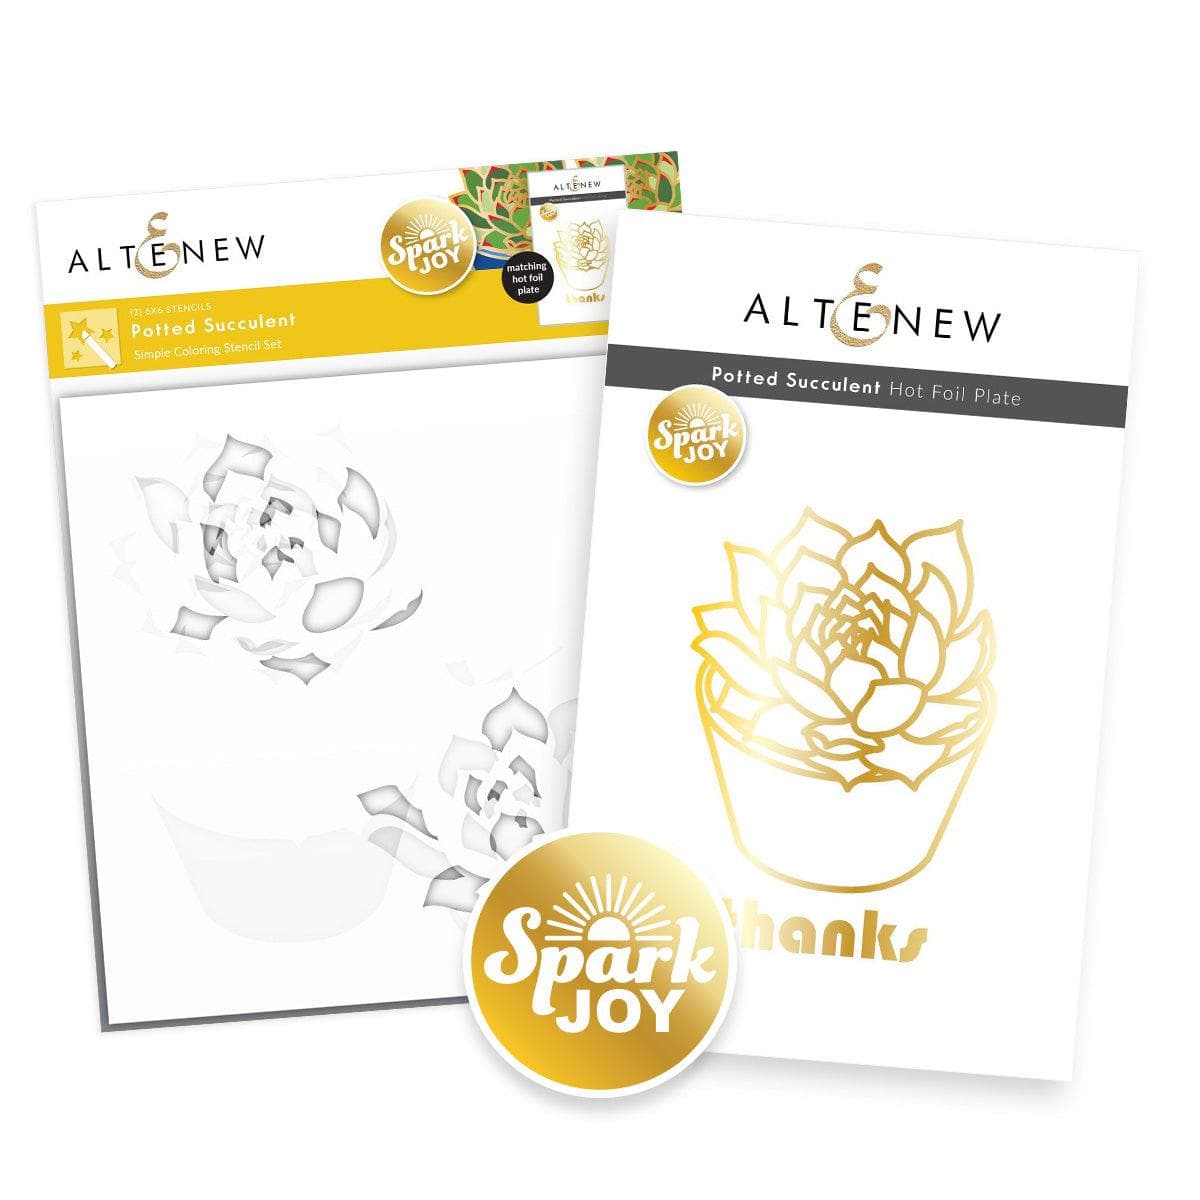 Altenew Release Bundle Marvelous Monthly Series Bundle - July 2023